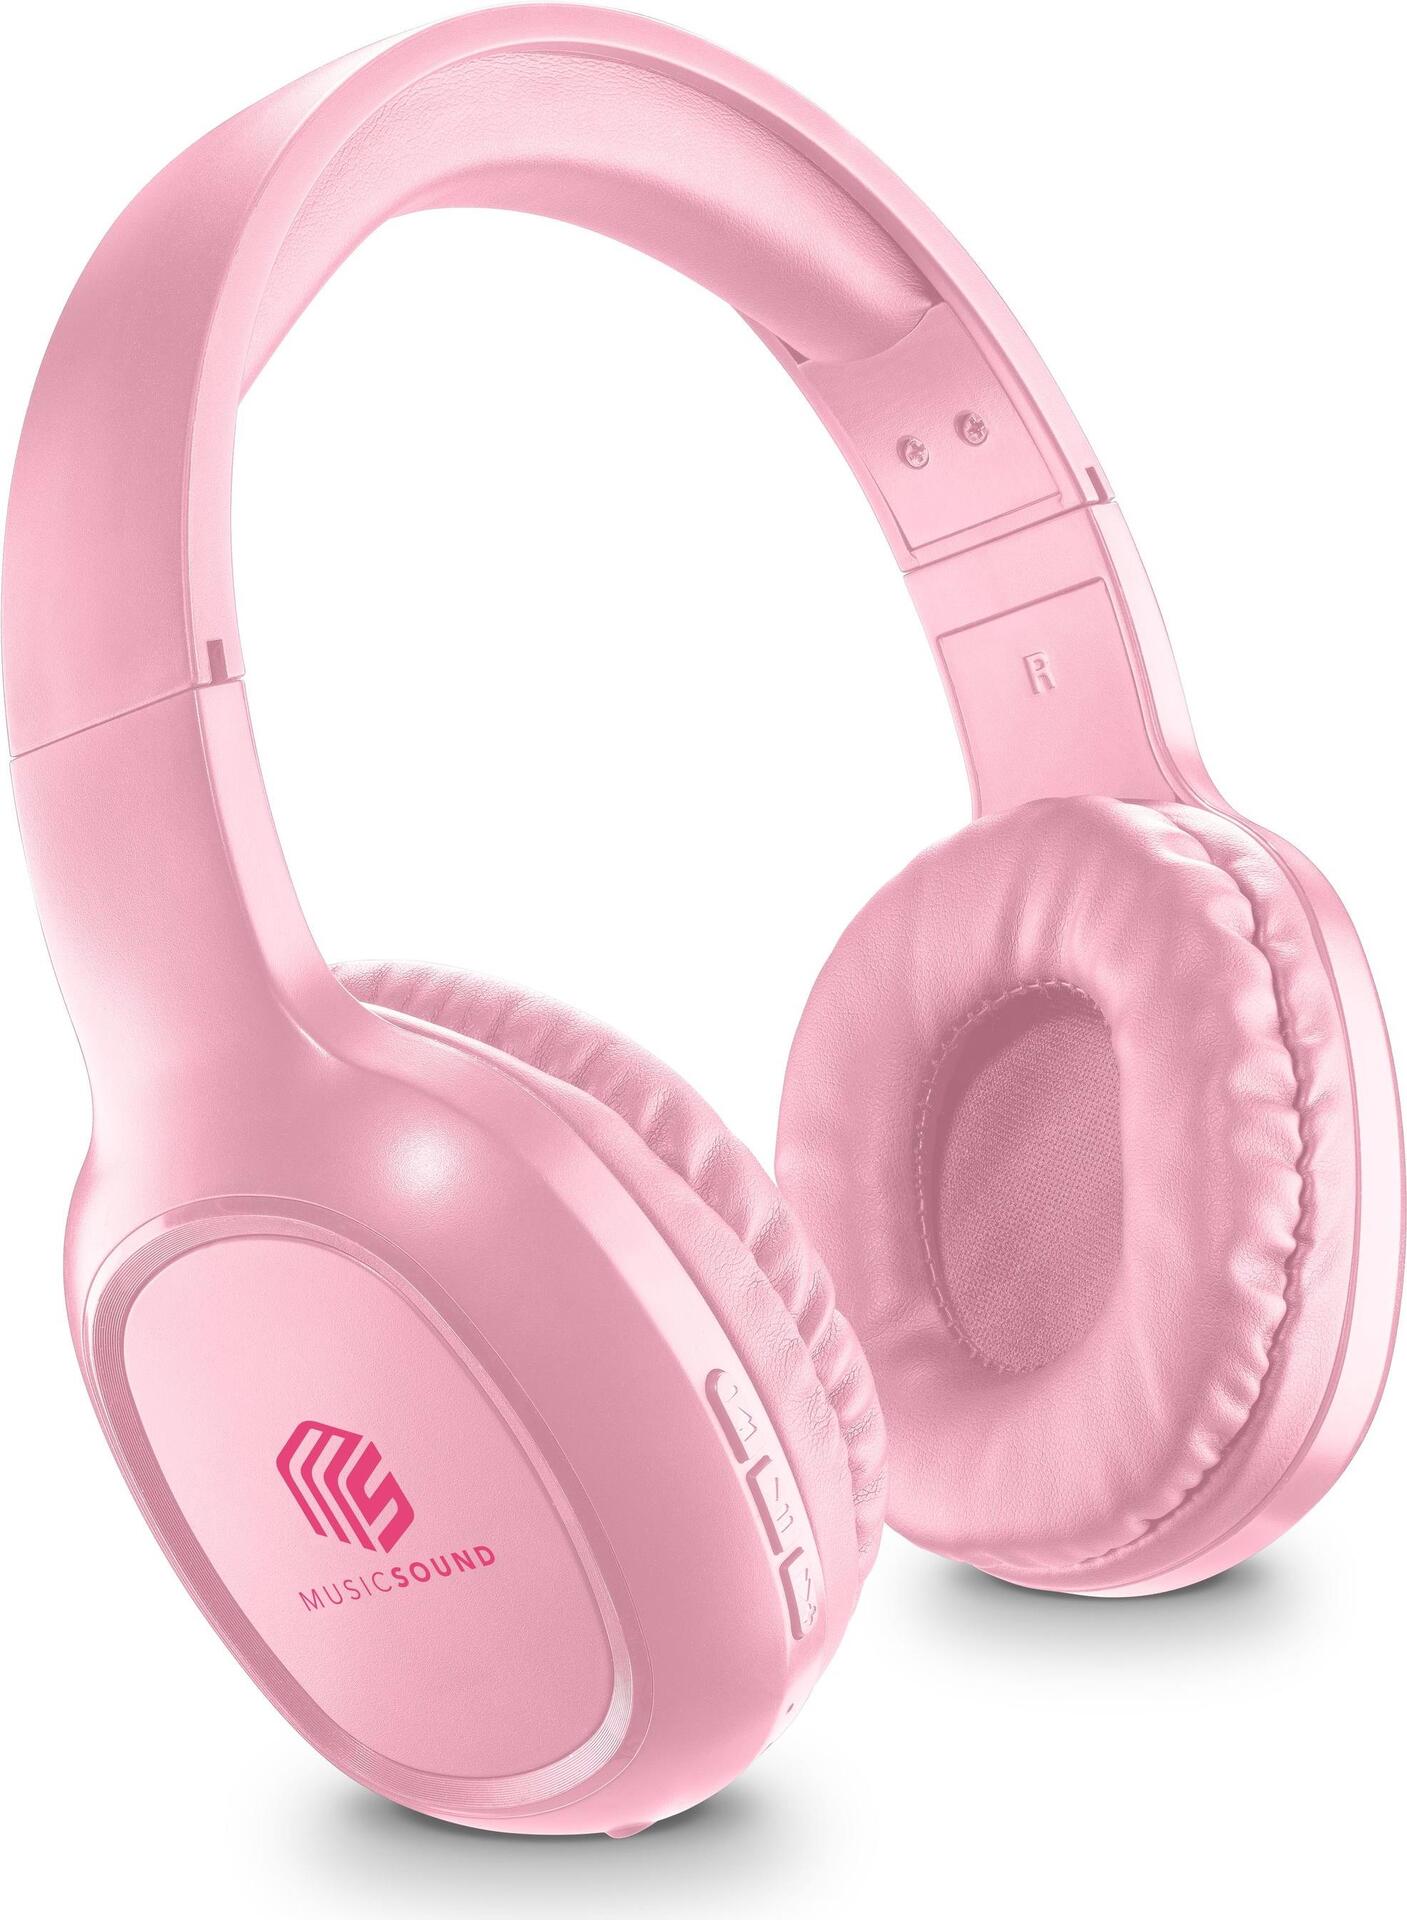 Cellularline Music & Sound Bluetooth Headphone BASIC Pink (BTHEADBBASICMSP)